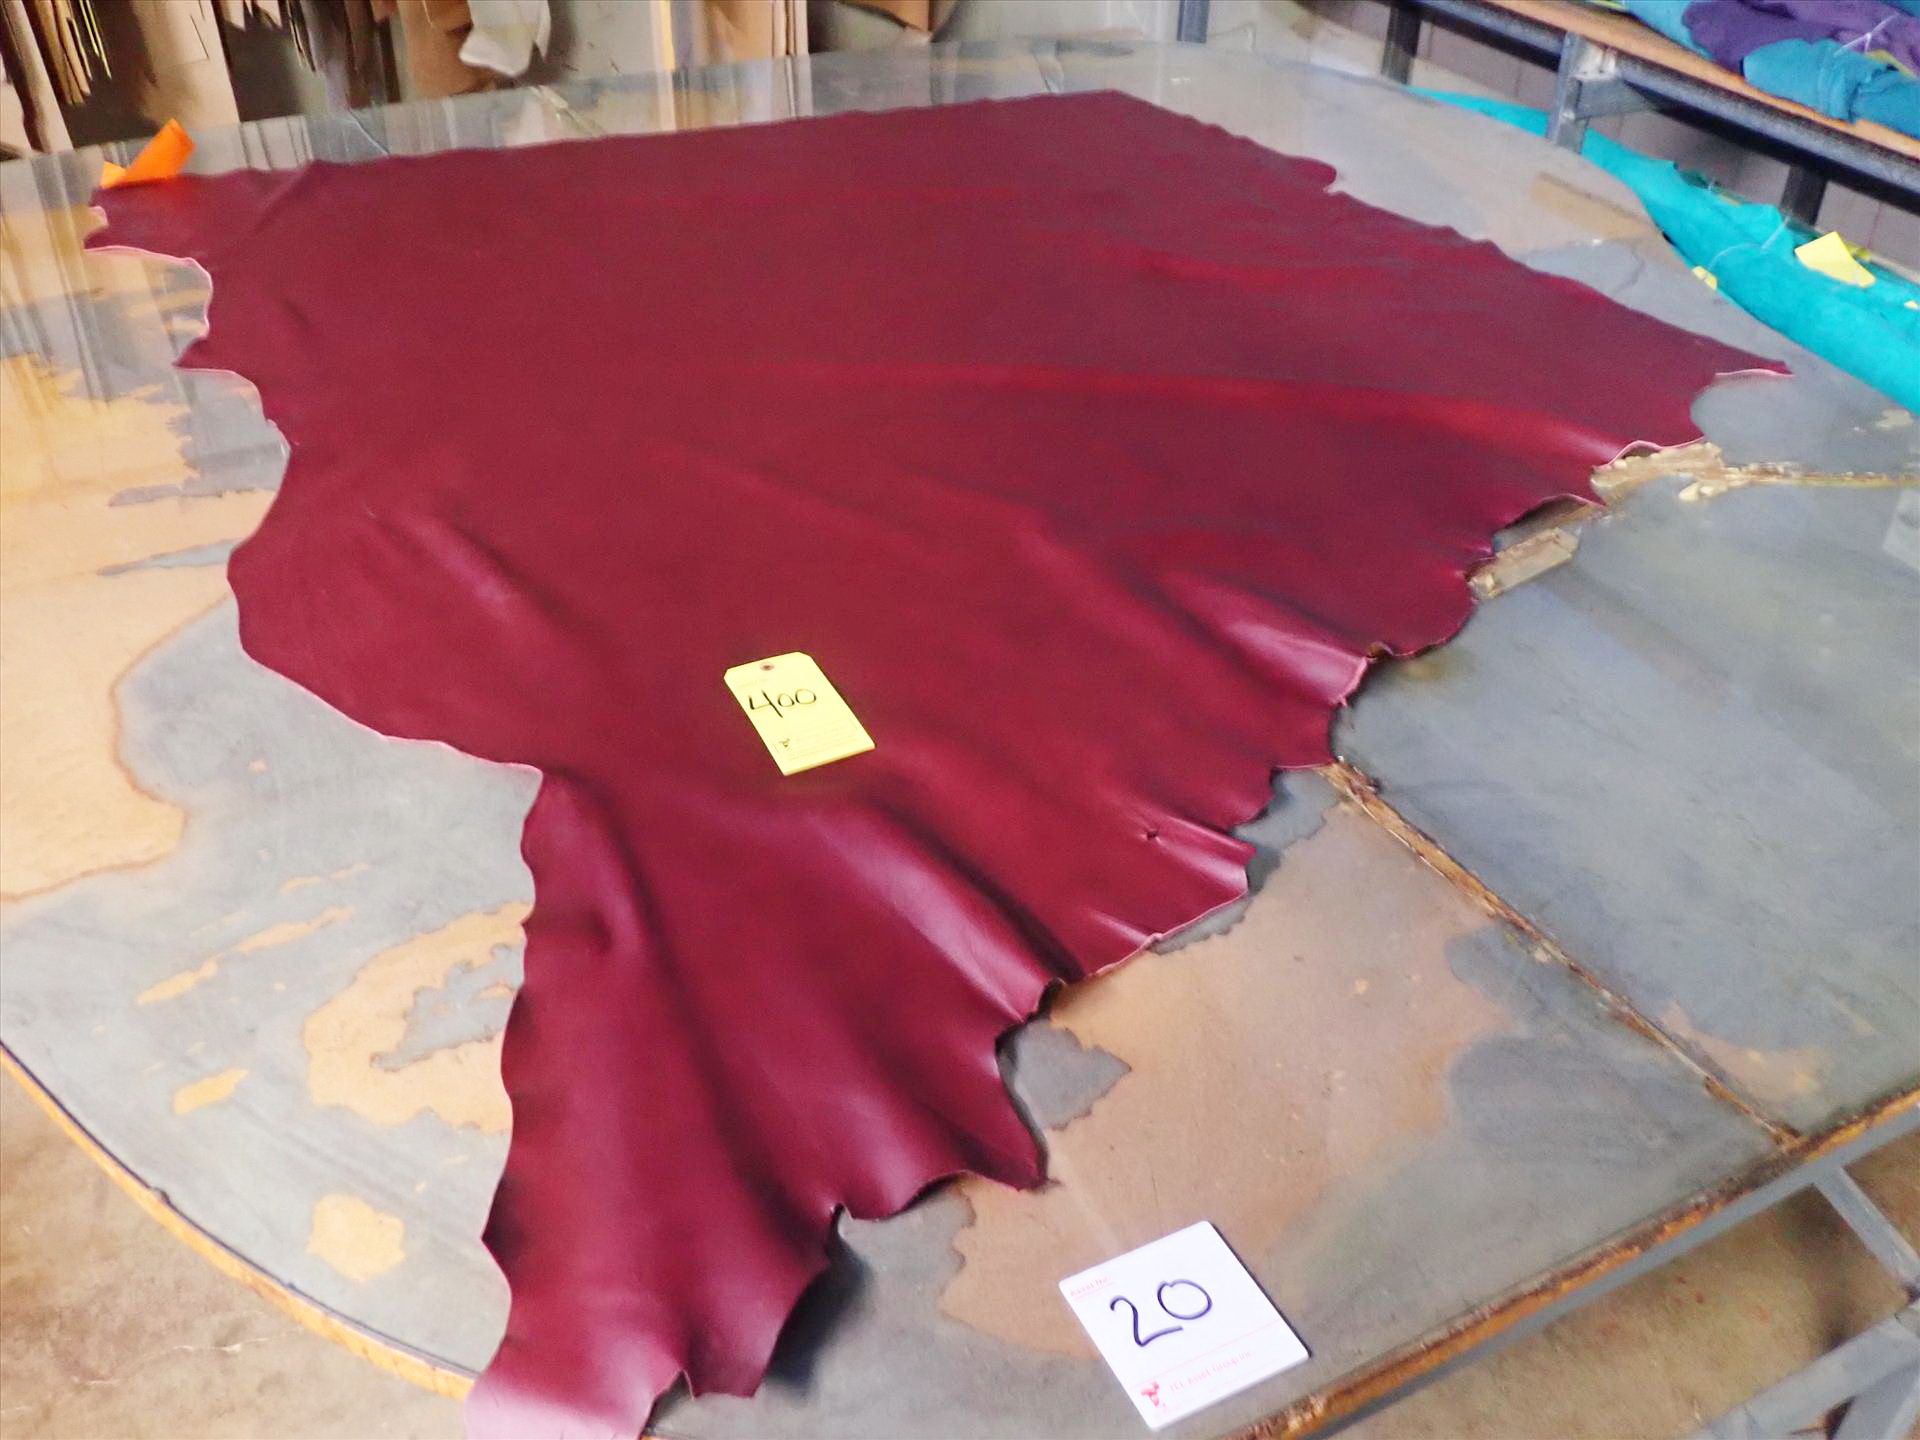 Leather, Supreme/Nutra/Bordeaux, partial hide, approx. 30 sq ft